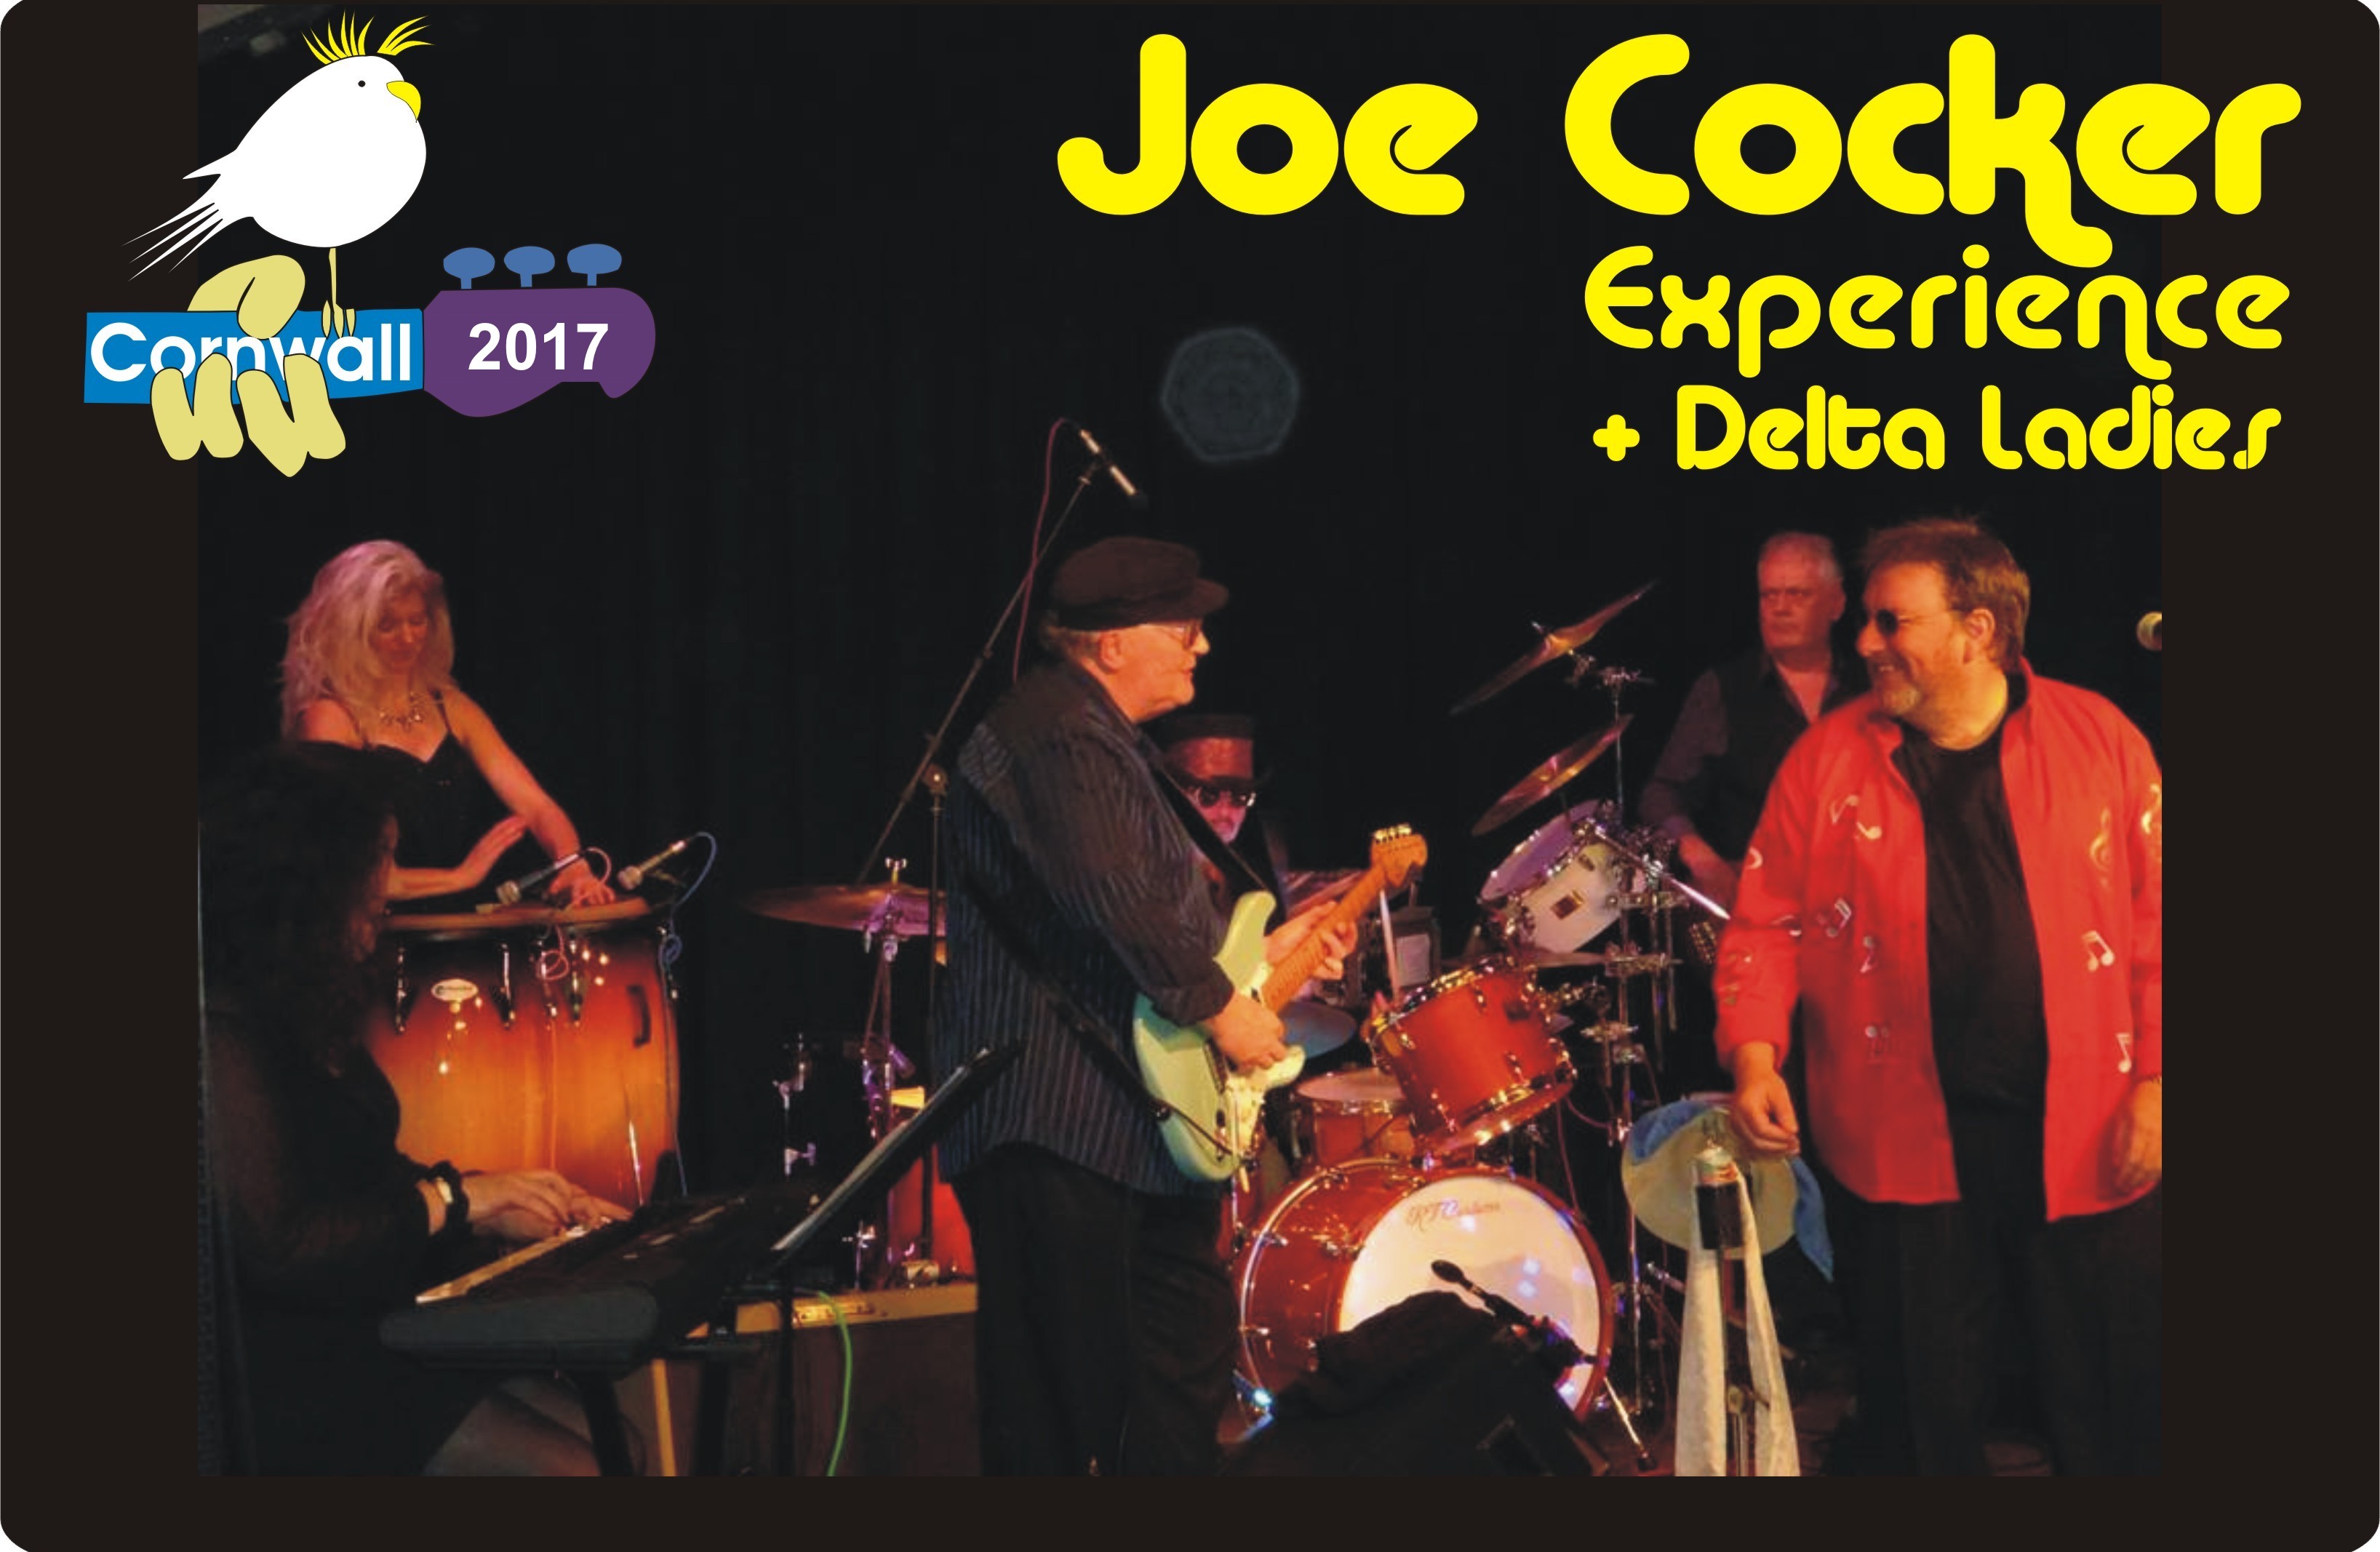 Joe Cocker Experience at Lane Theatre